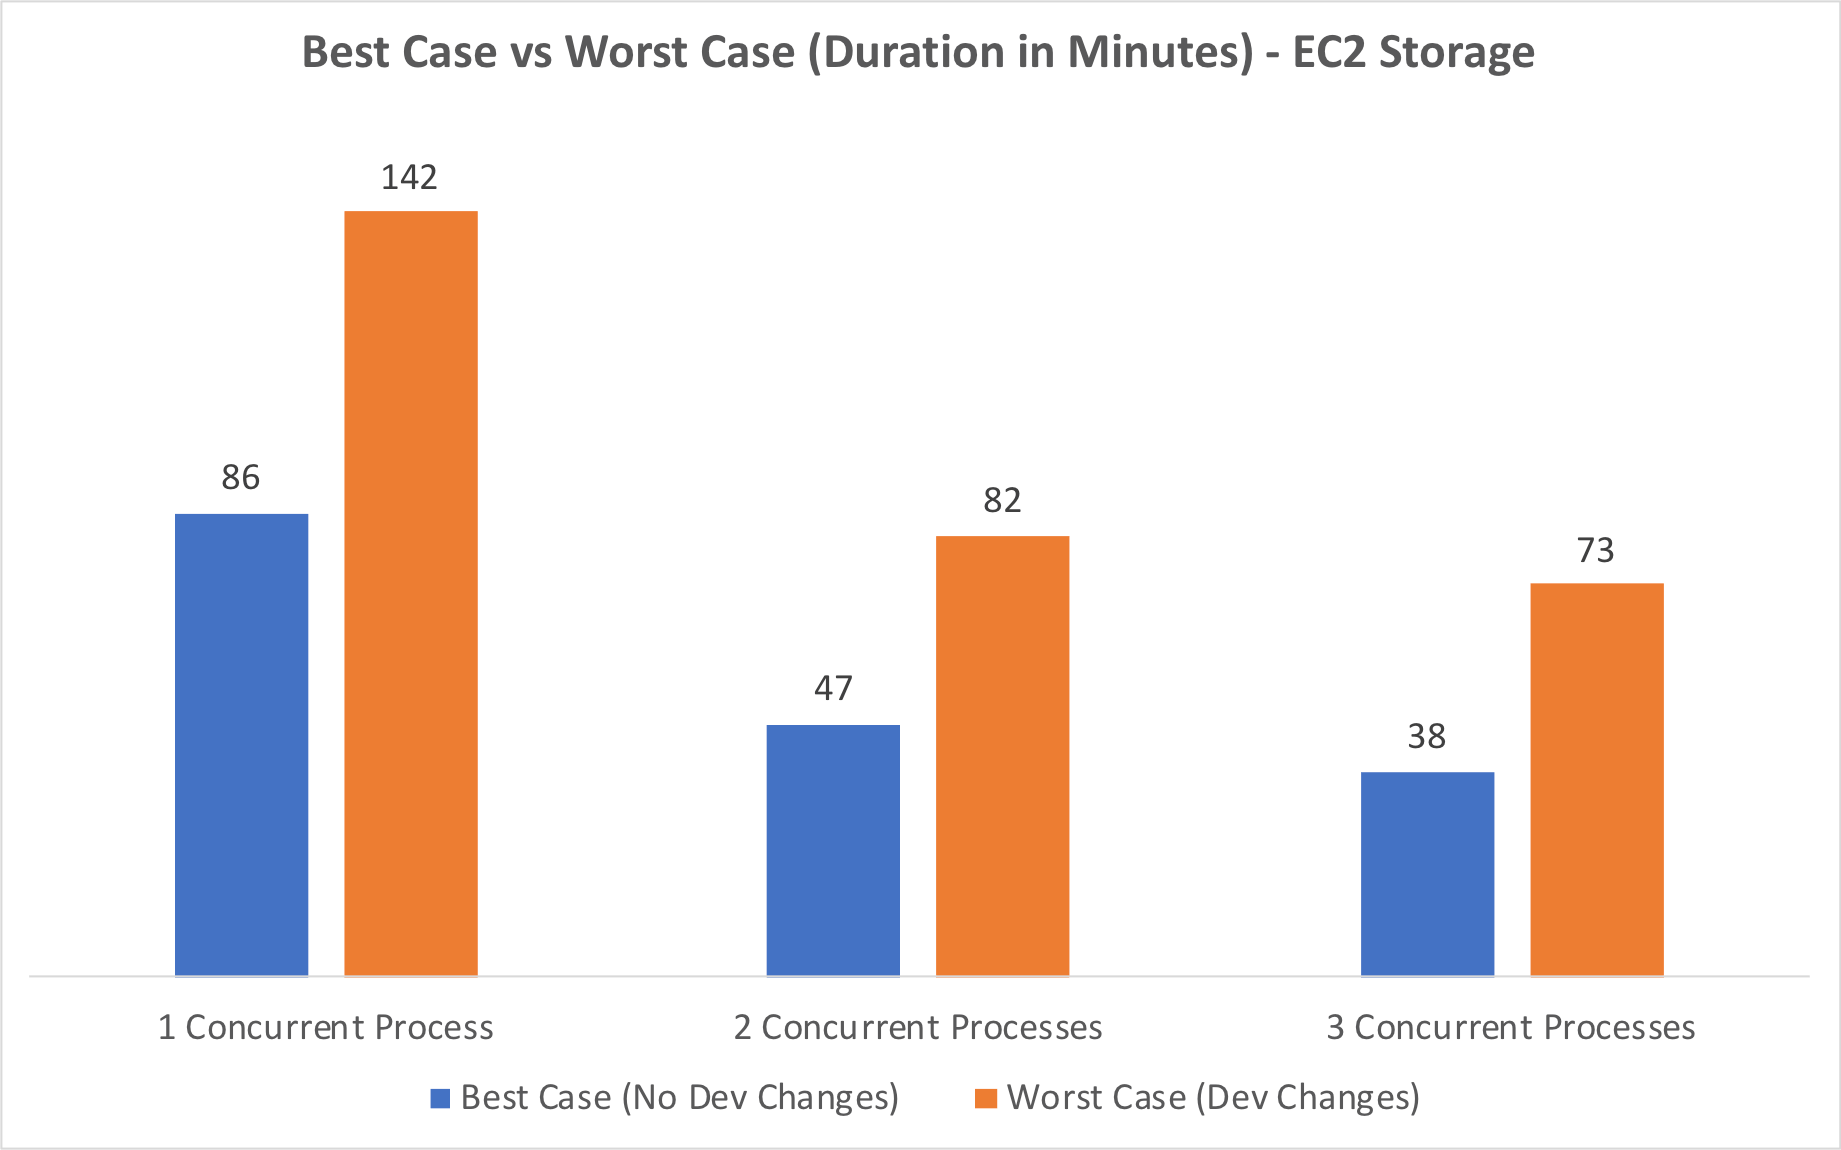 Screeshot of the Best Case vs. Worse Case - EC2 Storage